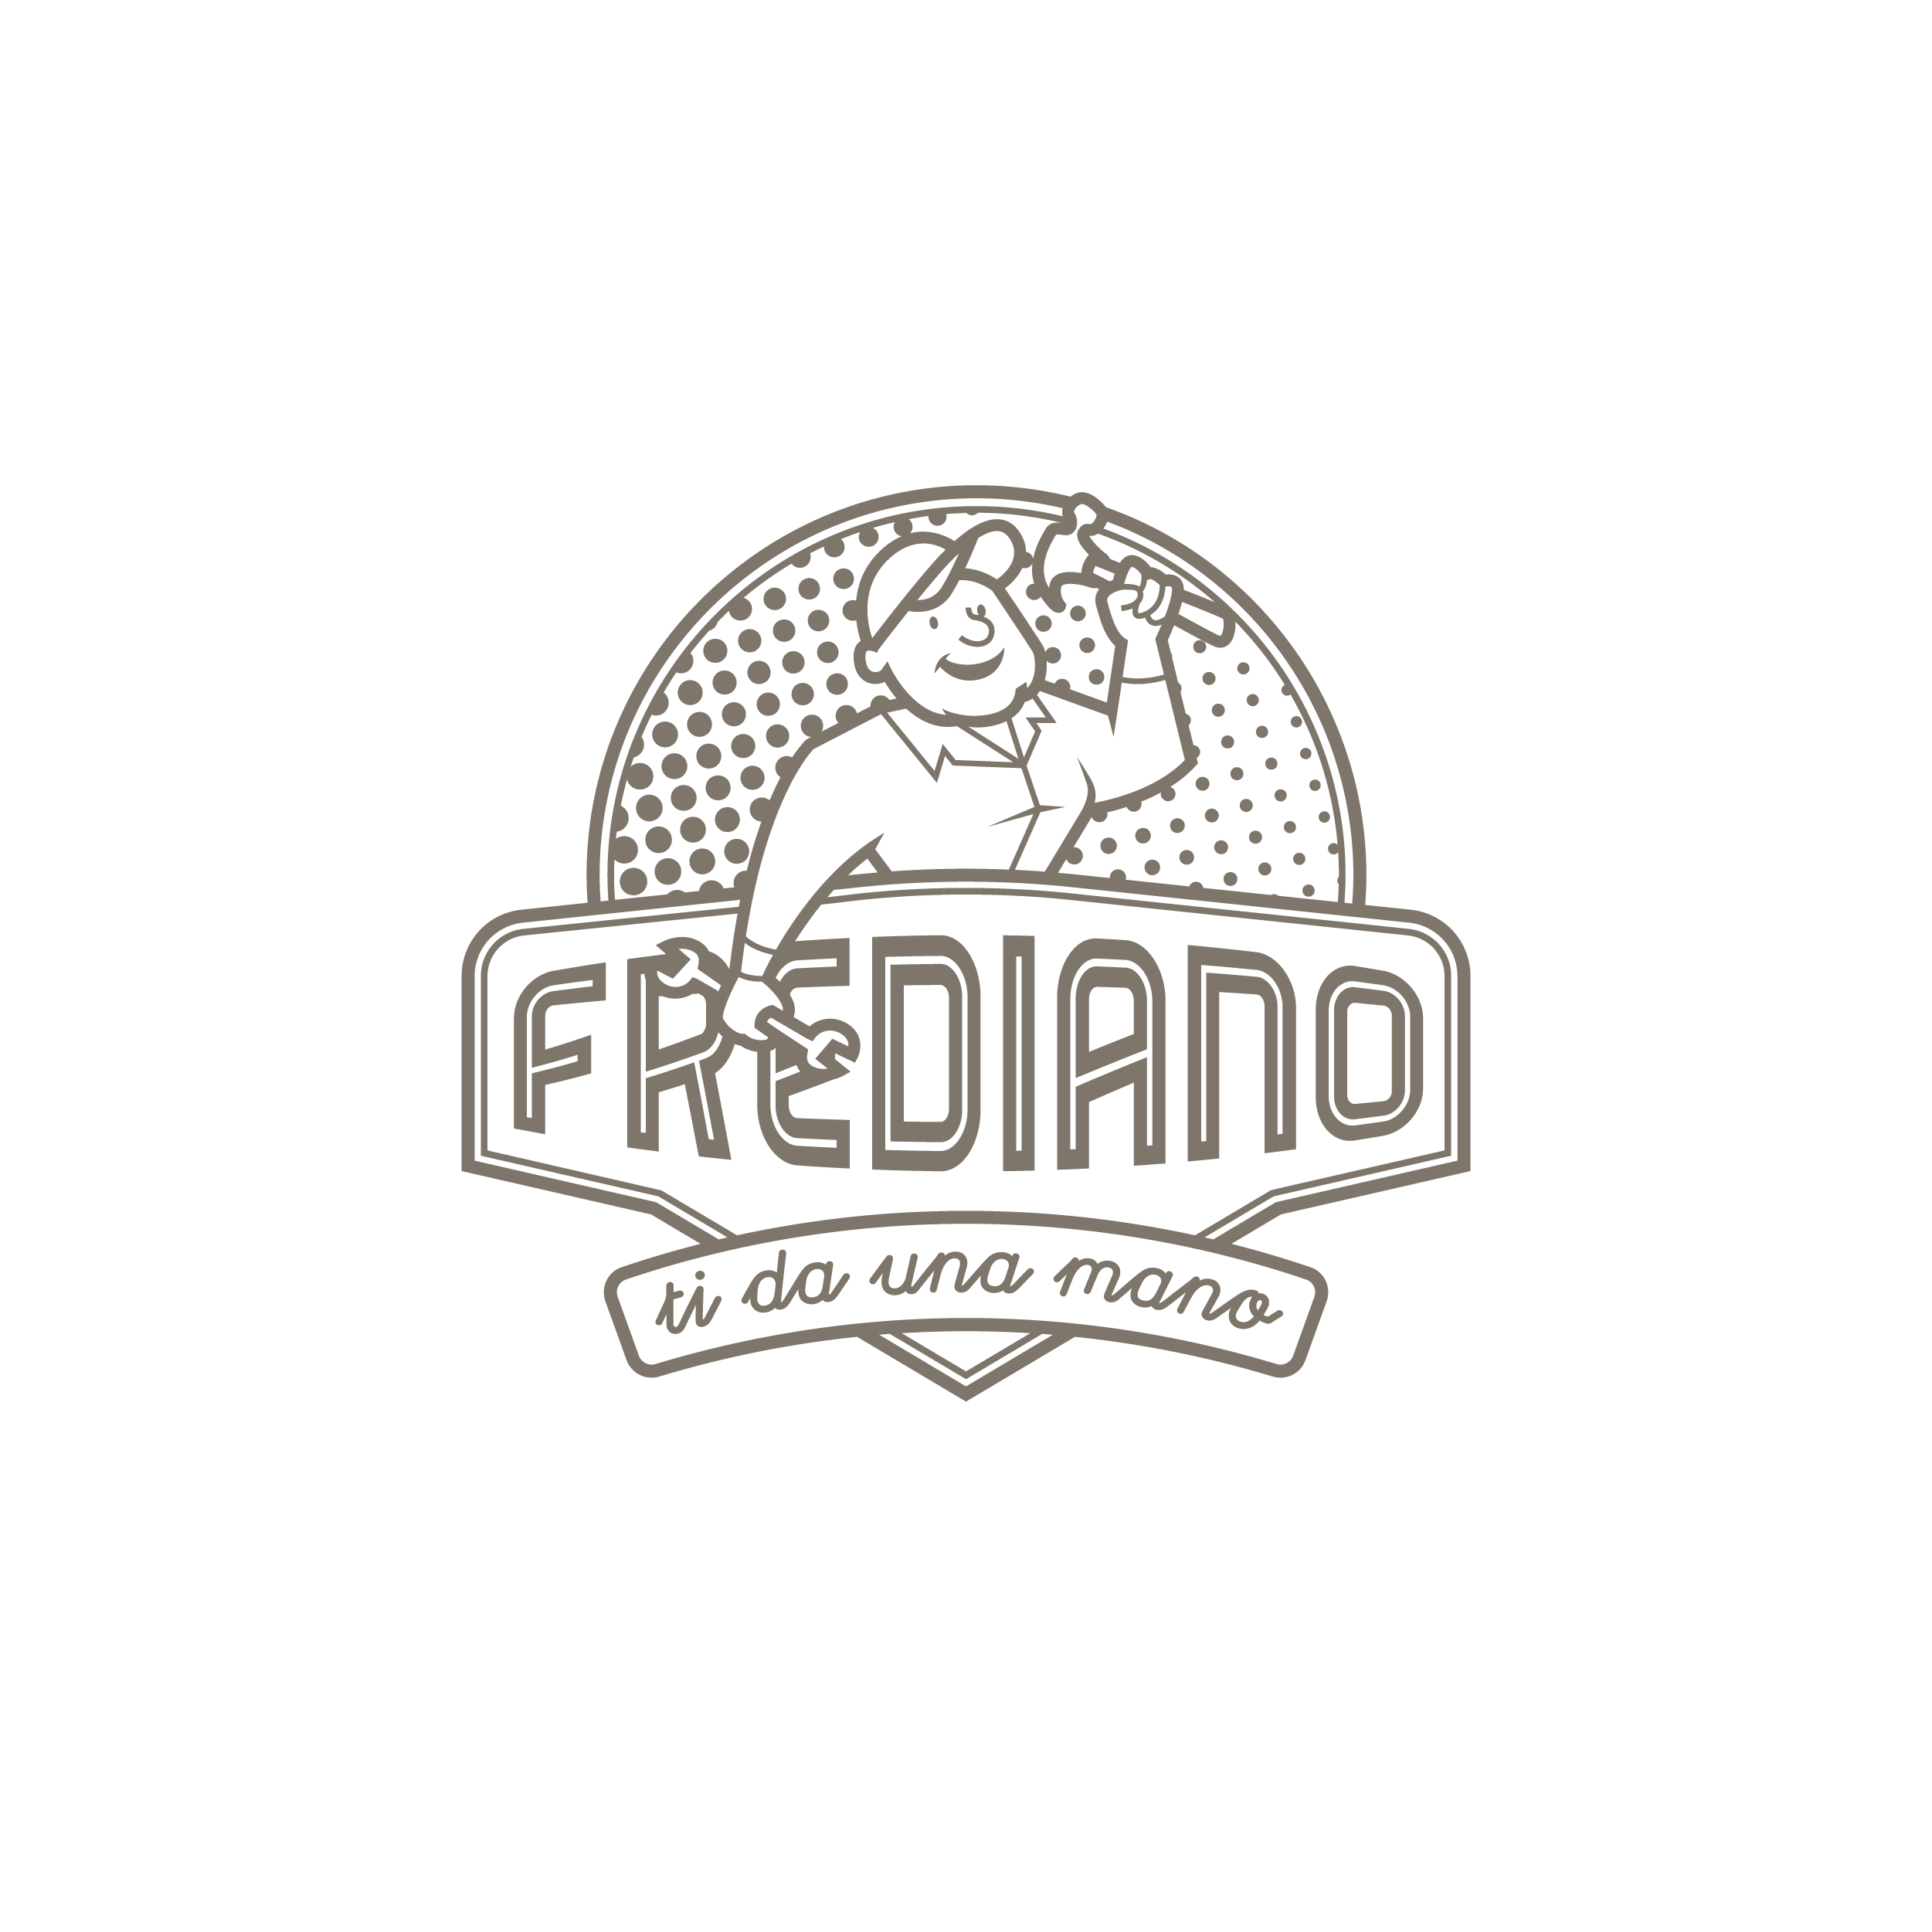 Frediano